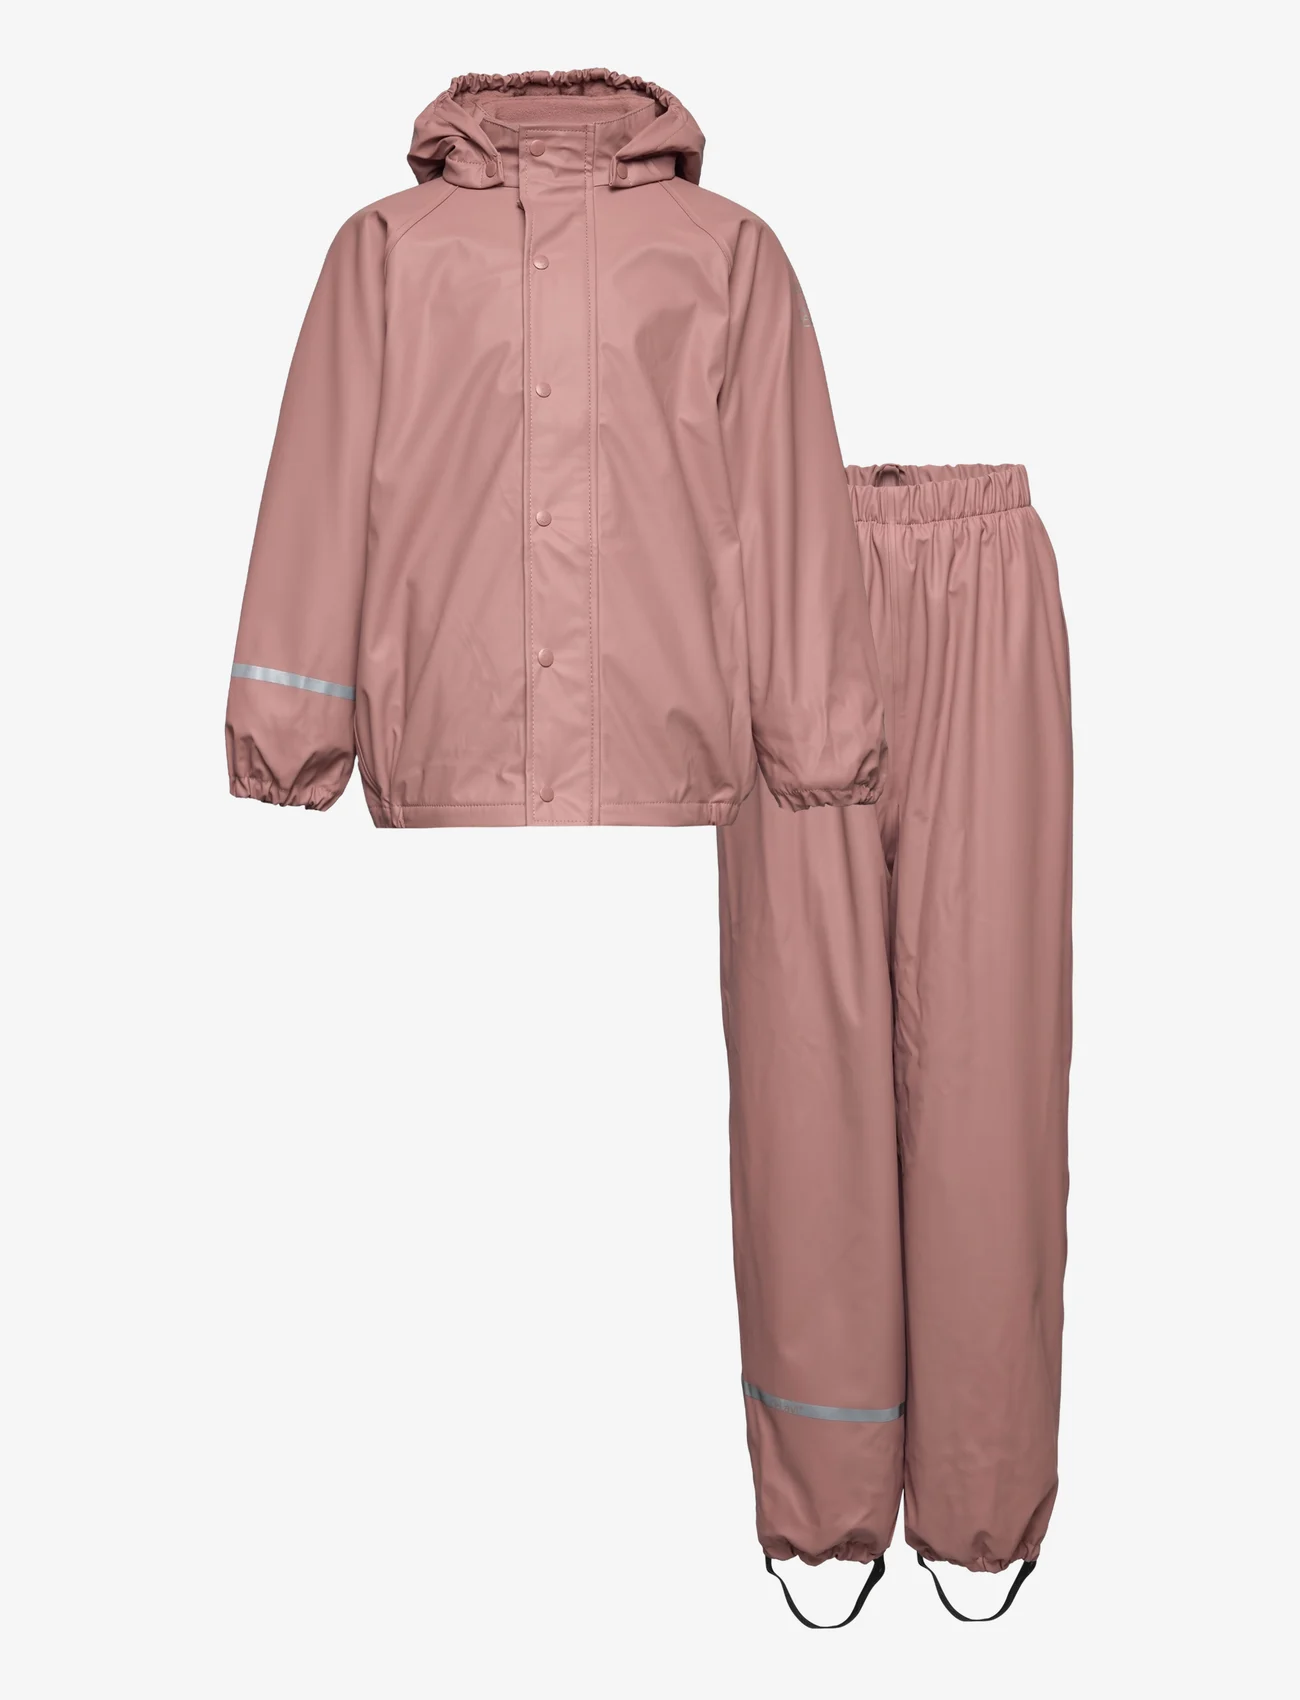 CeLaVi - Rainwear Set -Solid, w.fleece - talvihaalari - burlwood - 0